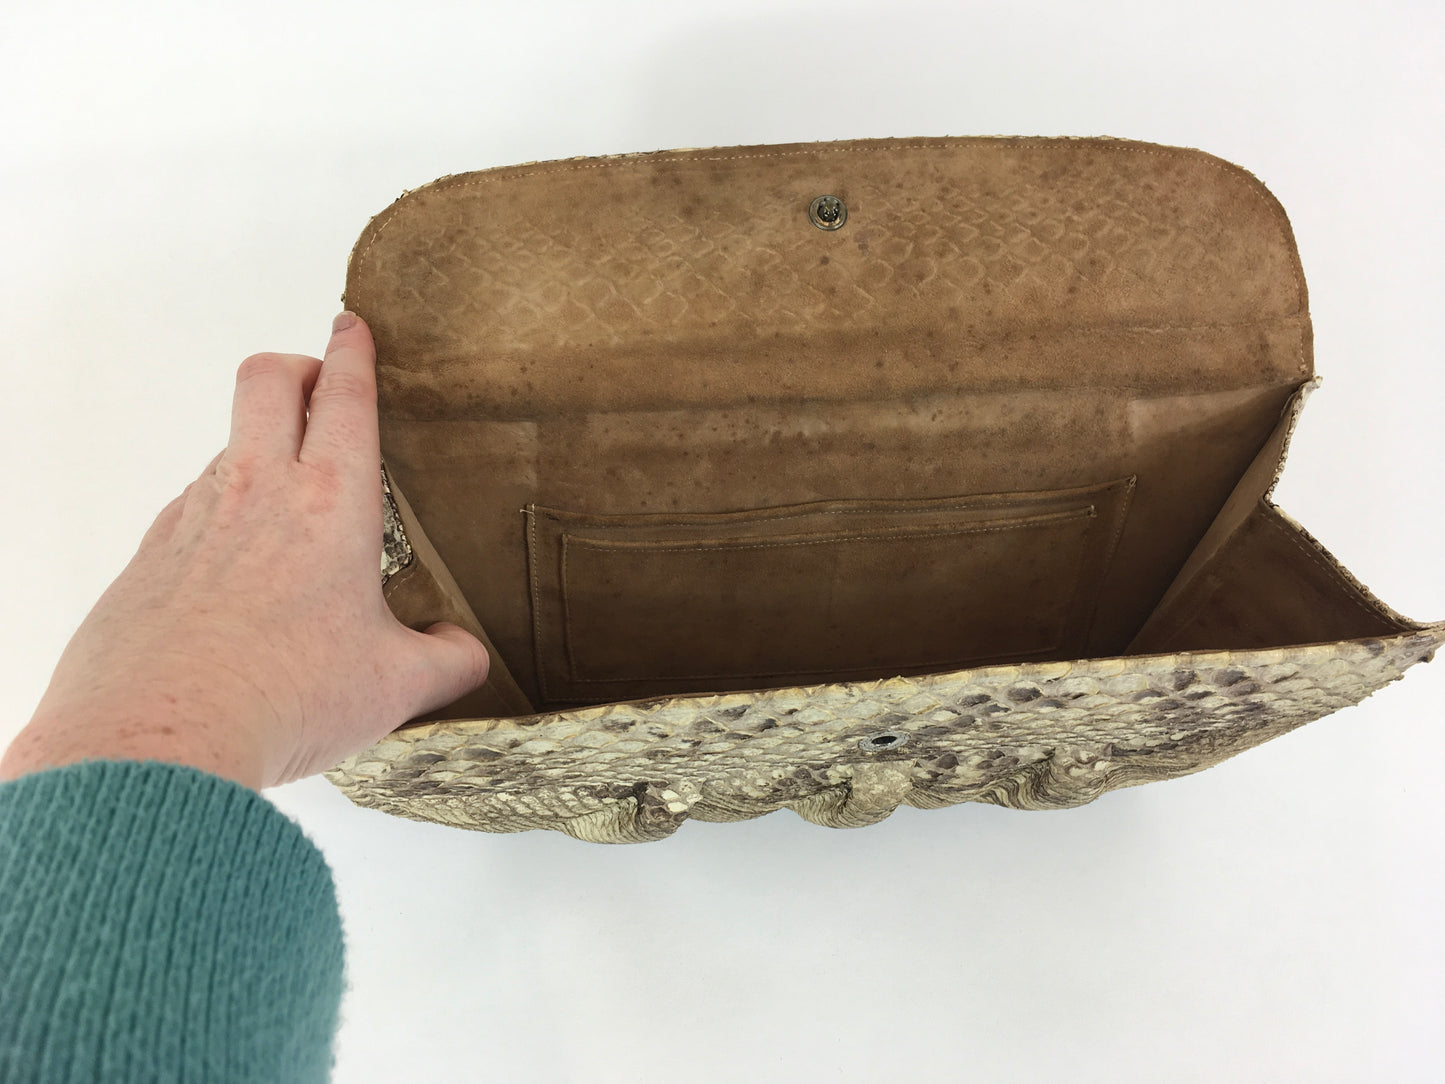 Original 1930’s Fabulous Snakeskin Clutch Handbag - With Beautiful Detailing